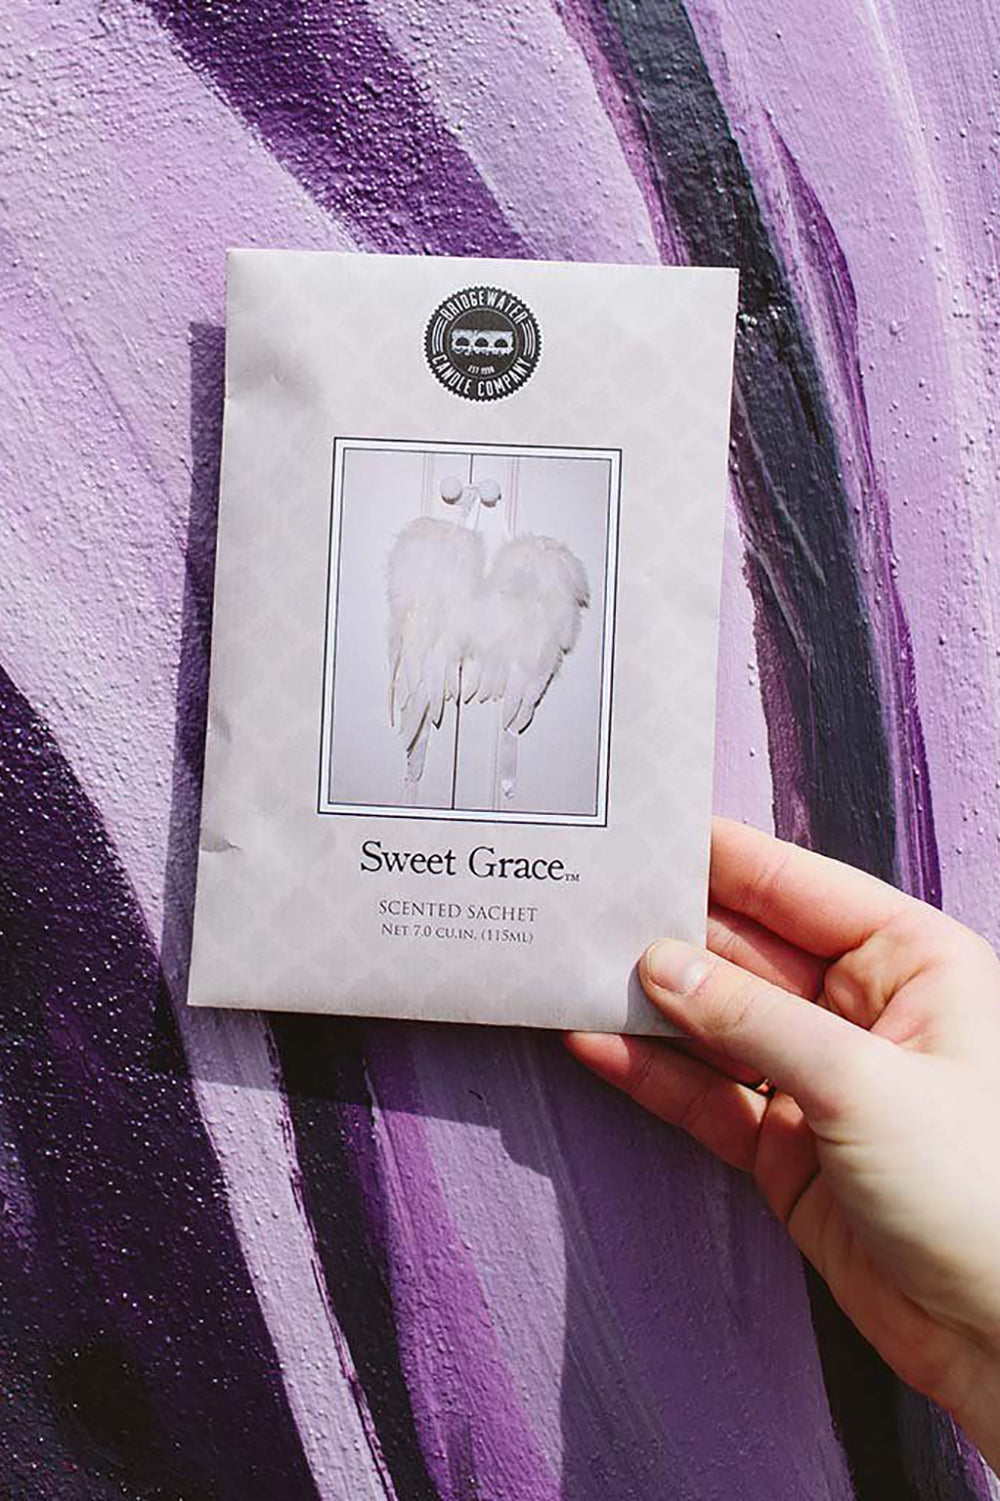 Bridgewater Scented Sachet-Sweet Grace